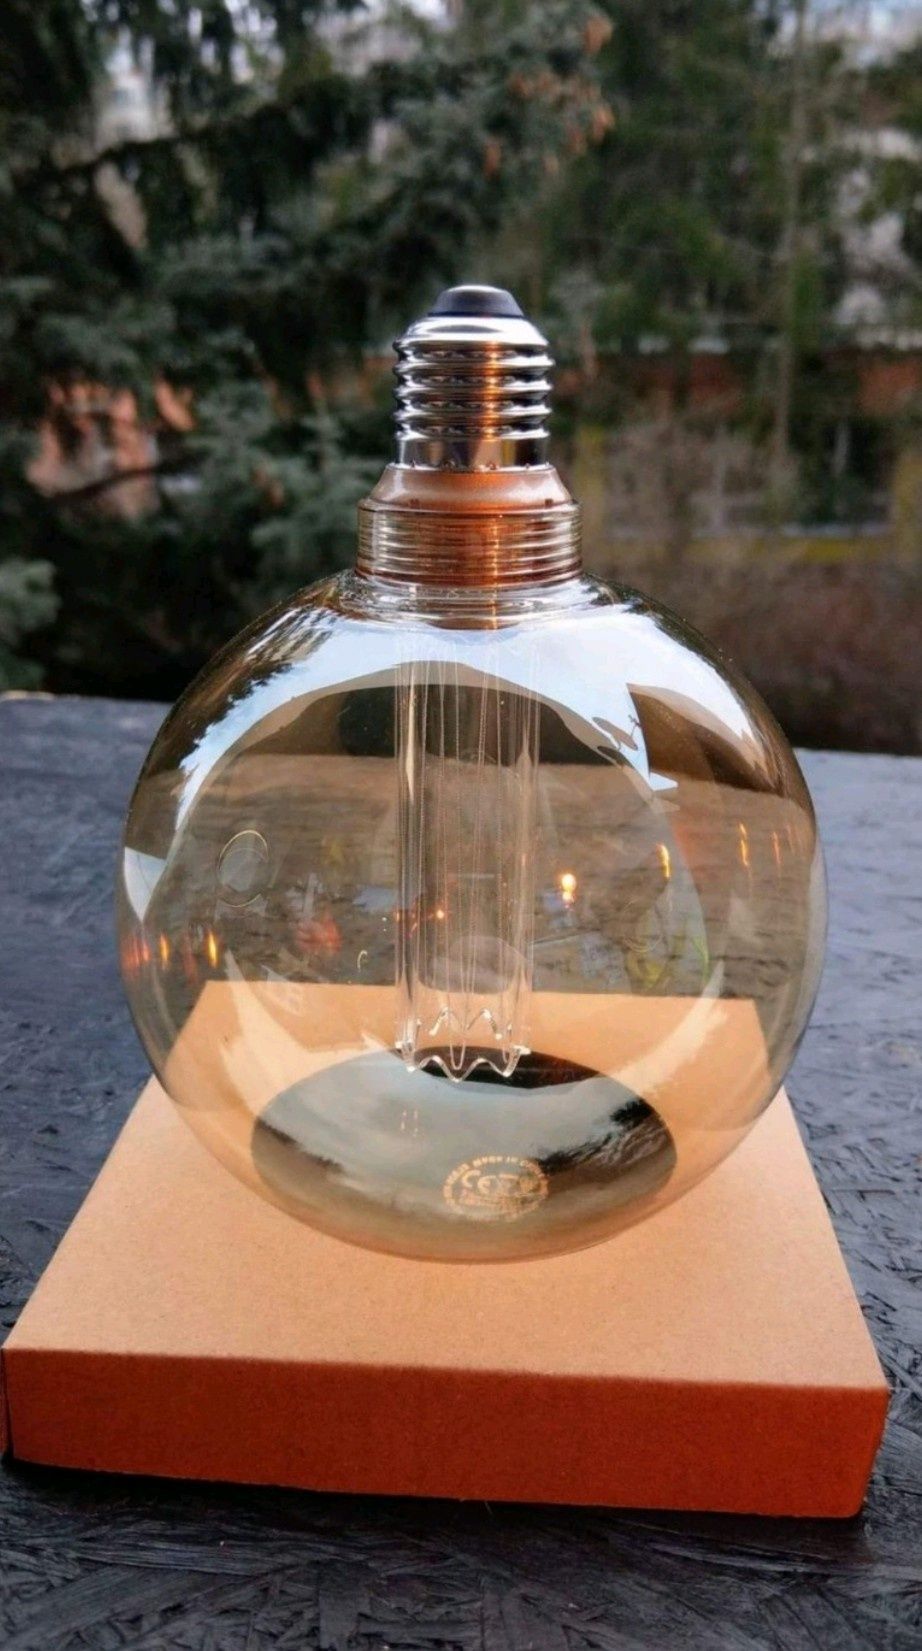 CROWN LED лампа Edison Illusion Bulb E27 Цоколь |